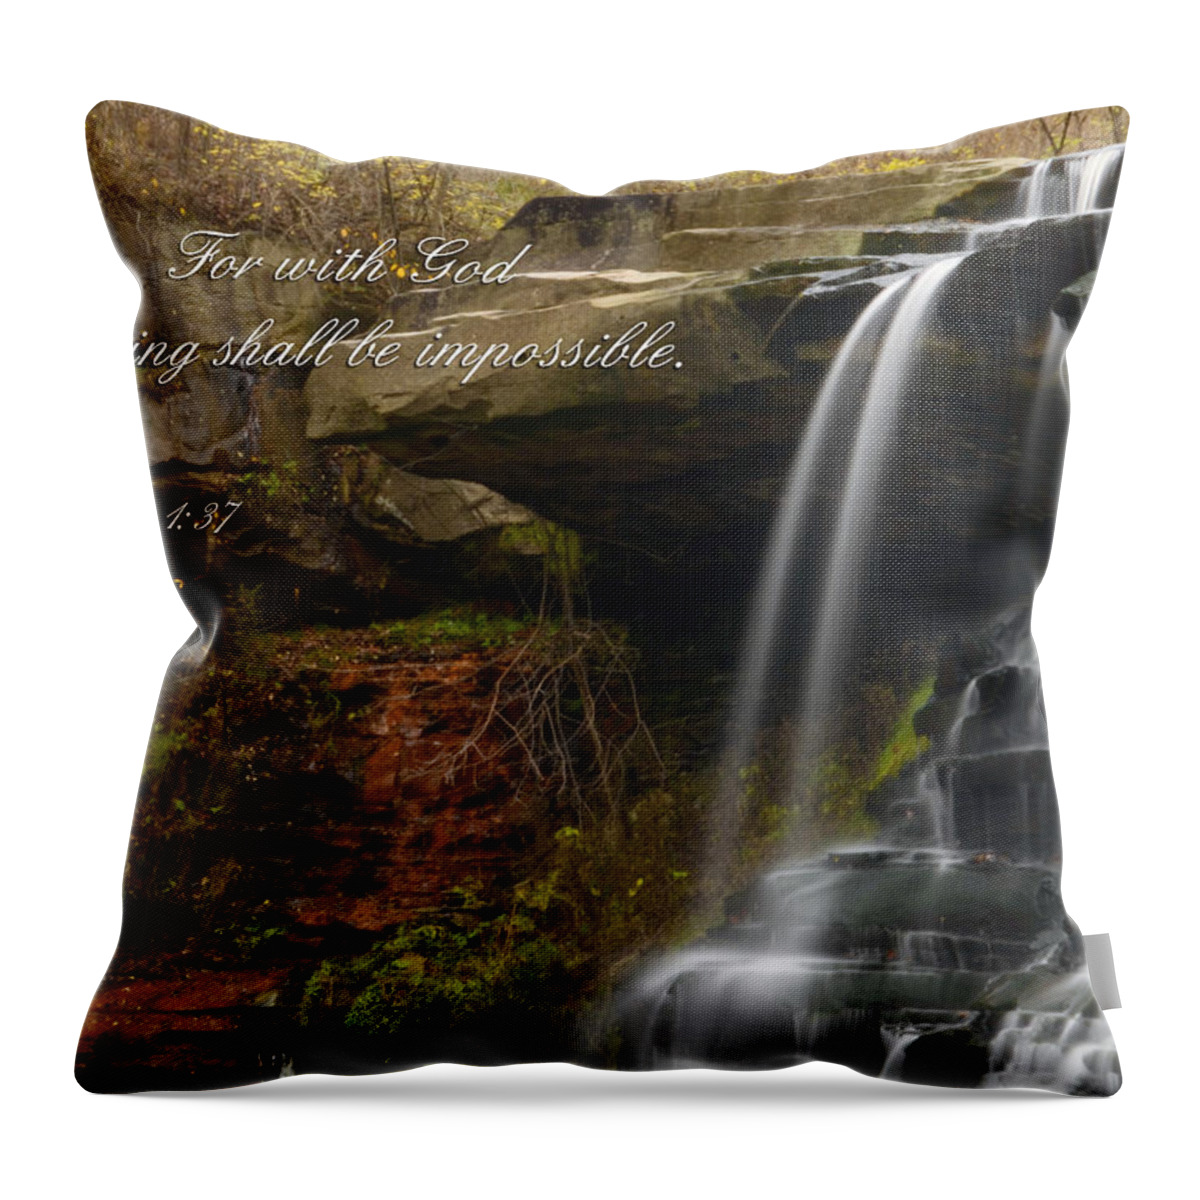 Luke 1:37 Throw Pillow featuring the photograph Luke Scripture Waterfall by Ann Bridges